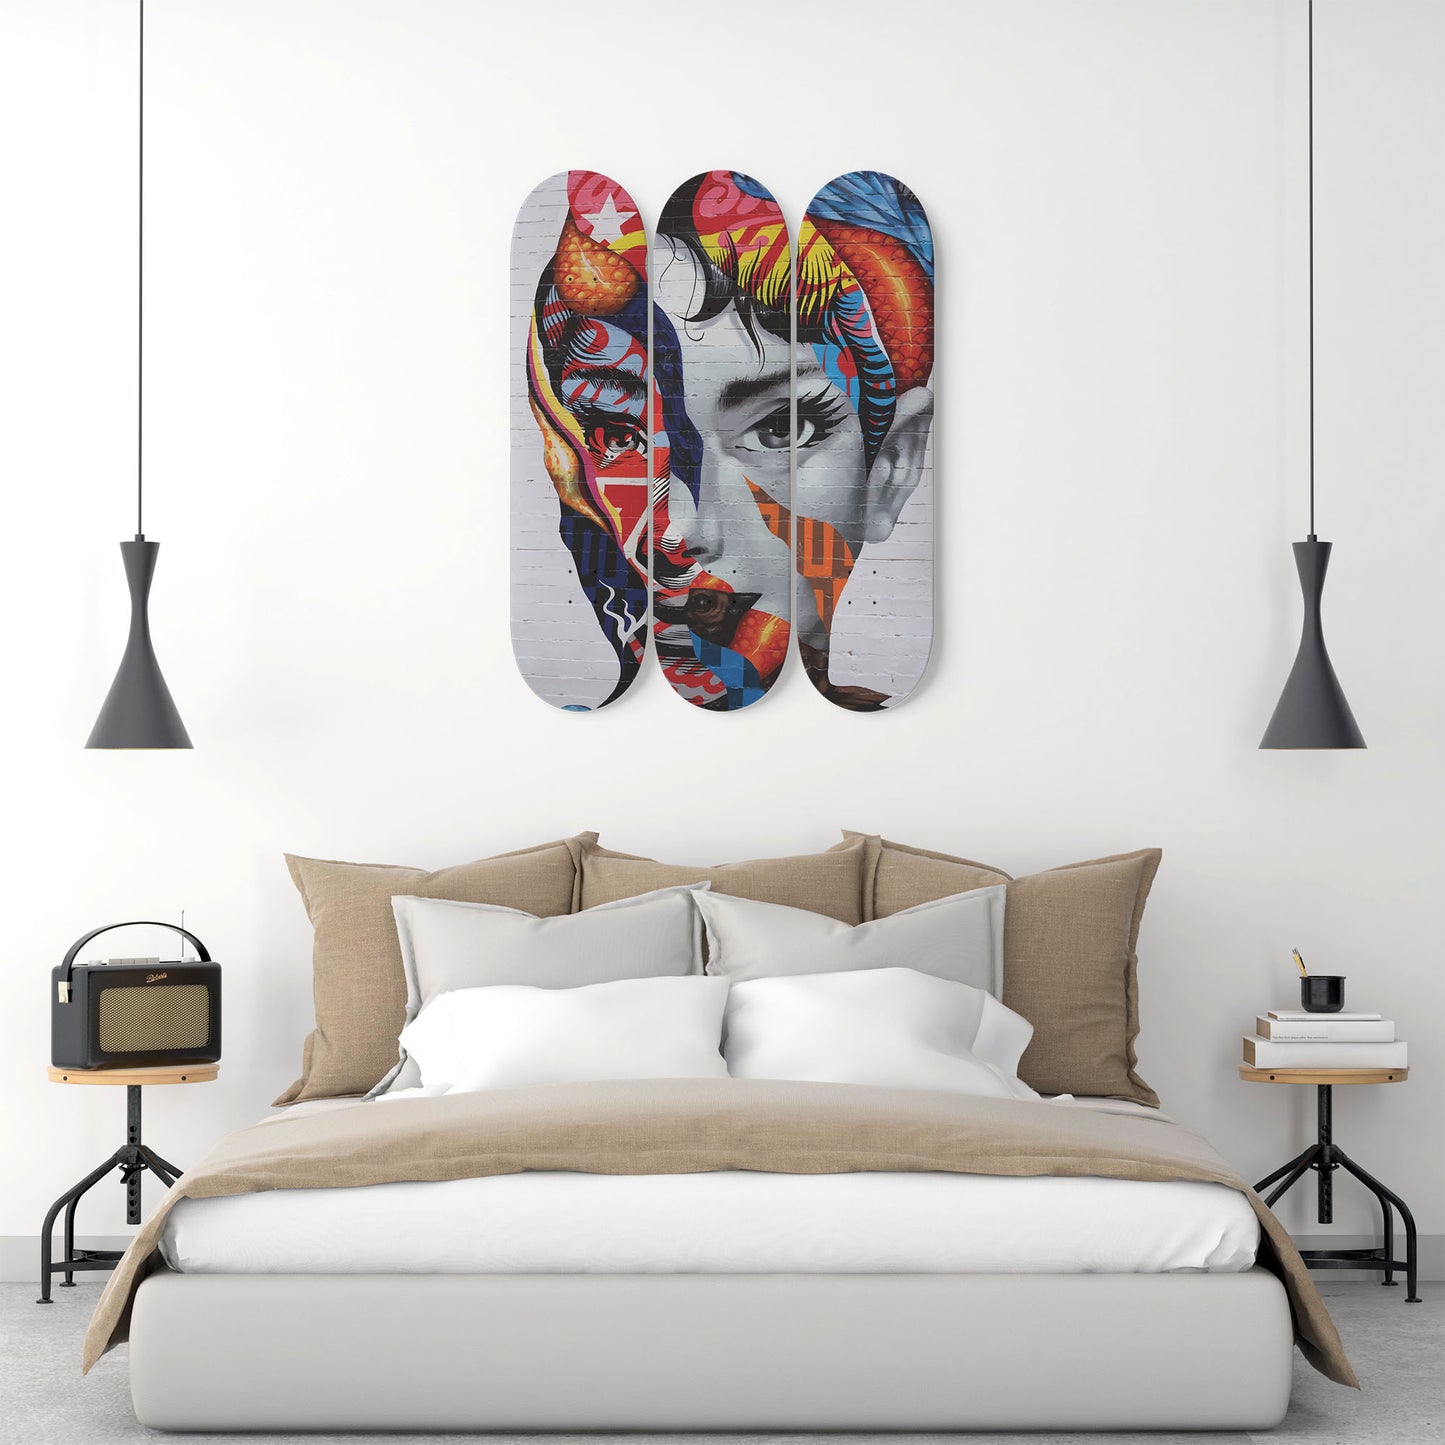 Audrey Hepburn Artwork 8 | 3-piece Skateboard Wall Art | Wall Decor | Best Unique Gift for Home Decor